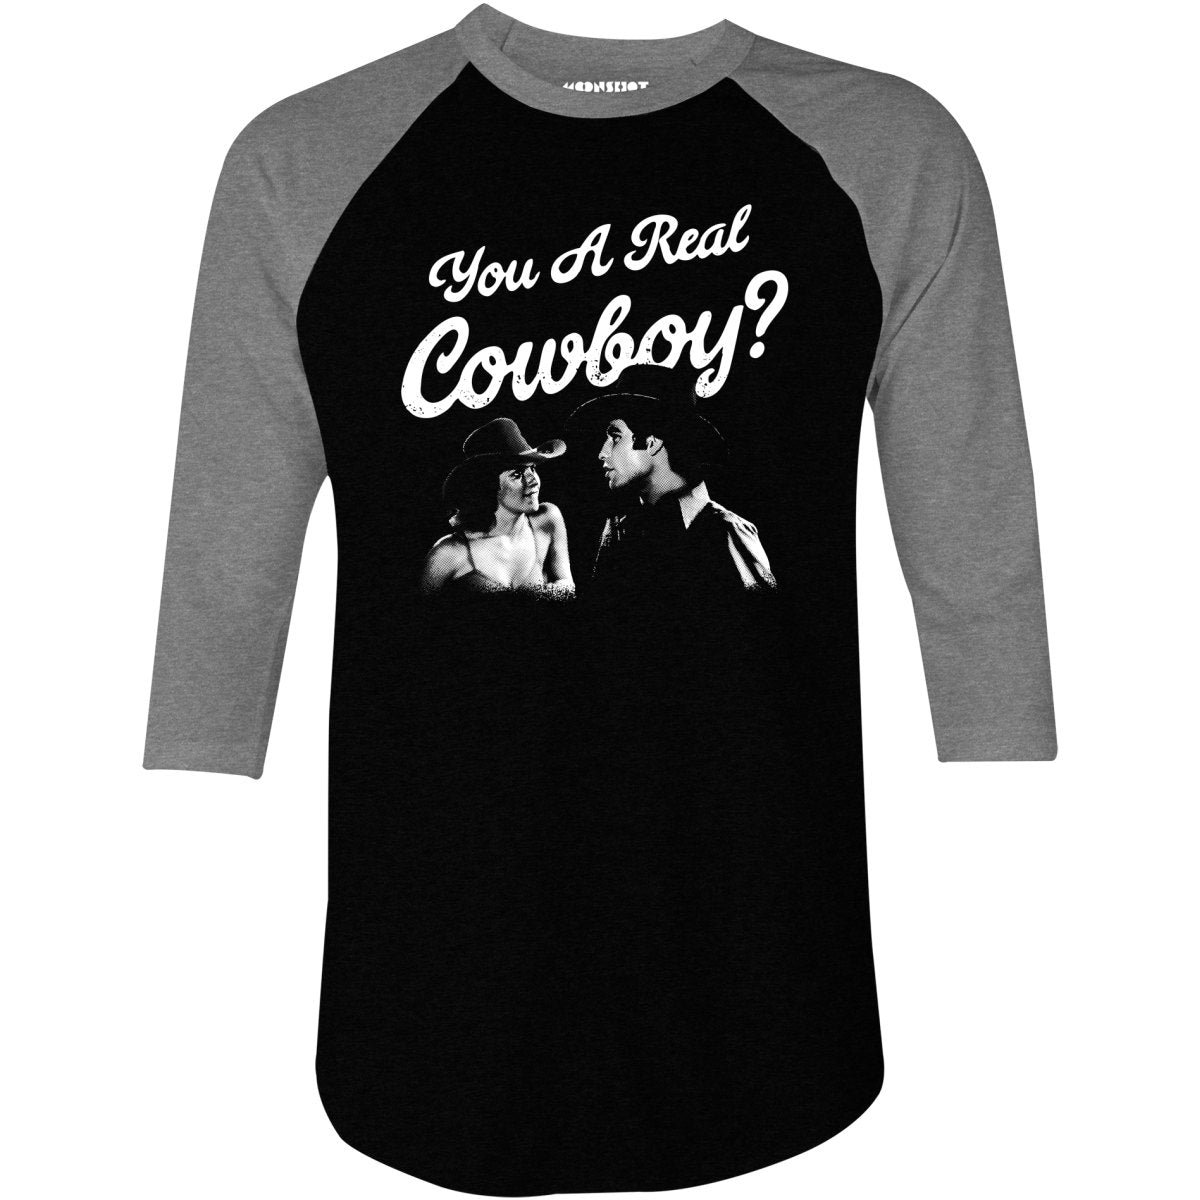 You a Real Cowboy? - 3/4 Sleeve Raglan T-Shirt